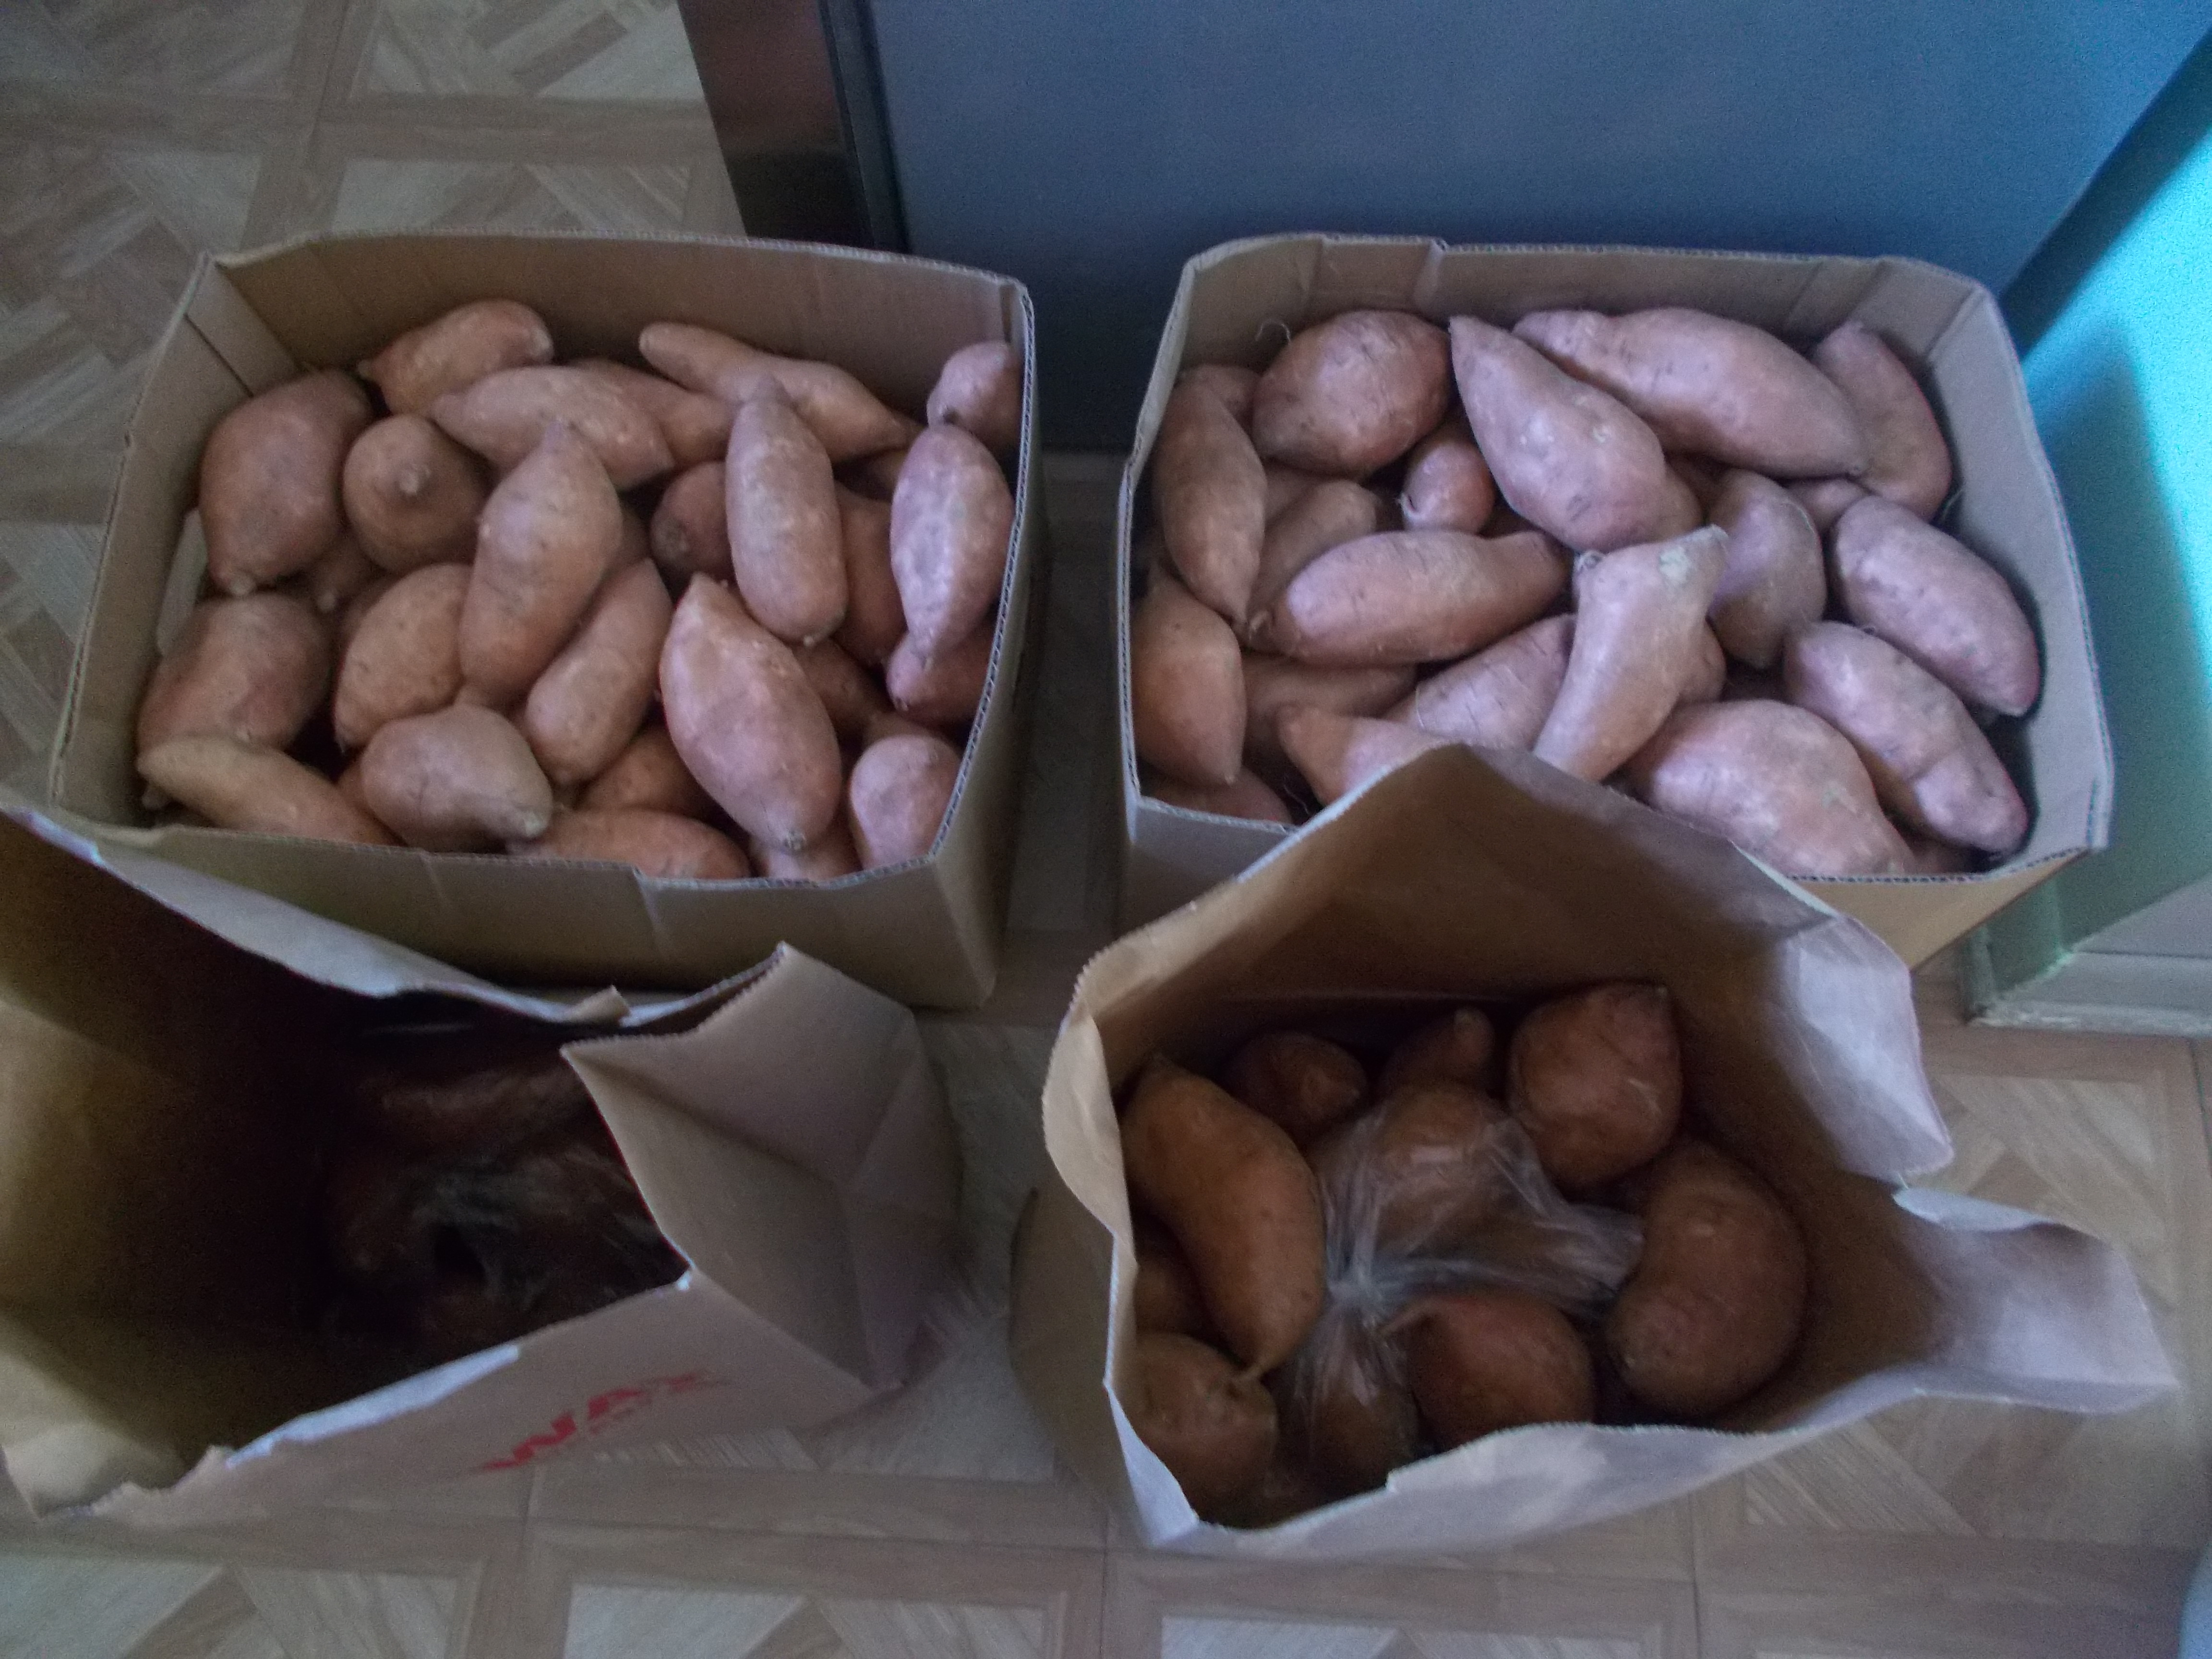 over 100lbs sweet potatoes